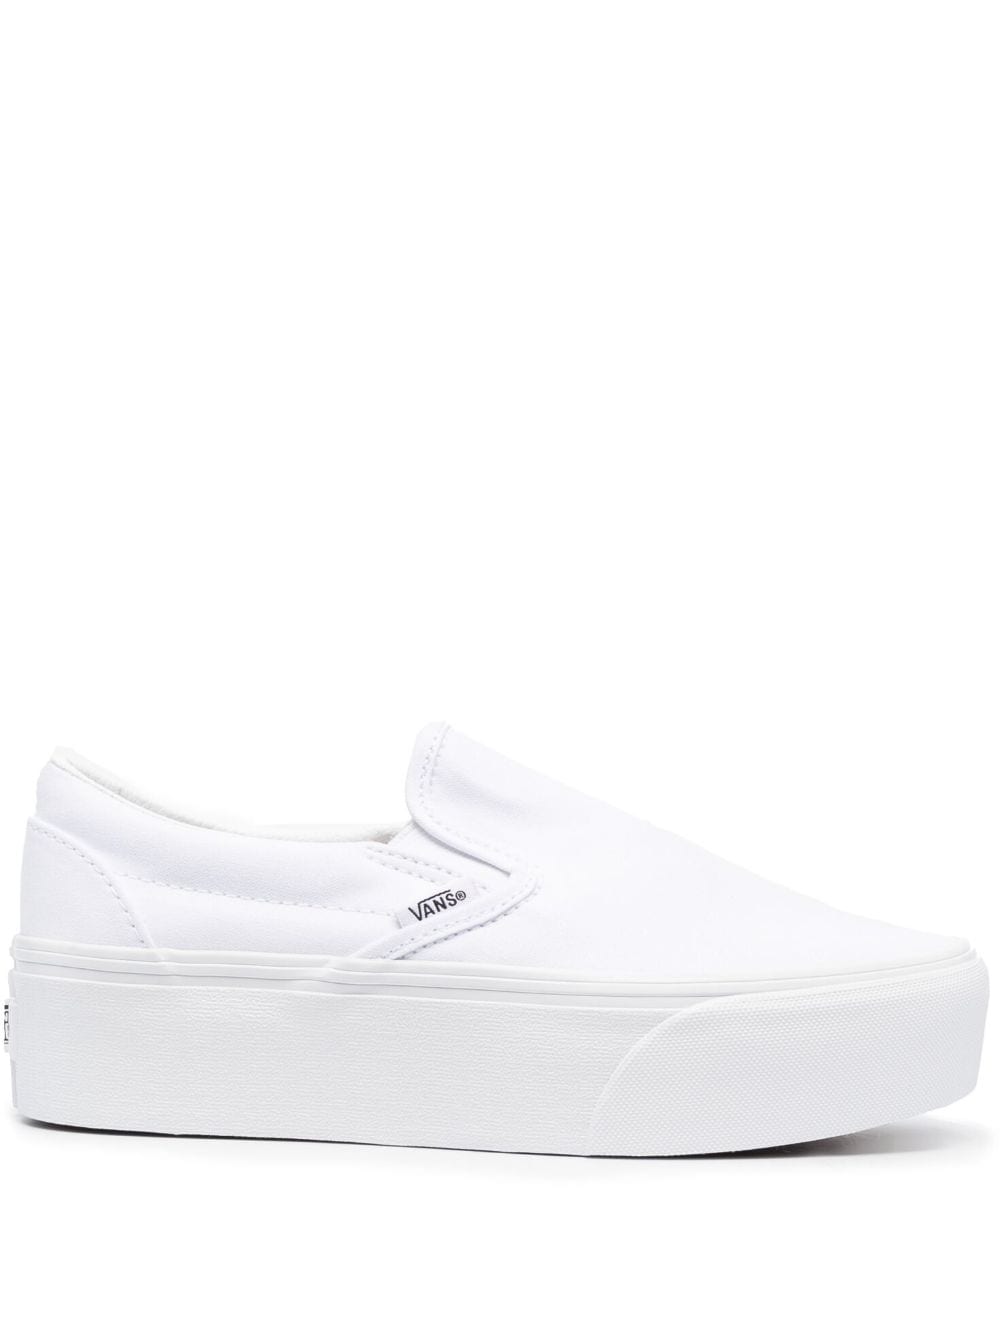 Vans classic slip-on platform sneakers - White von Vans